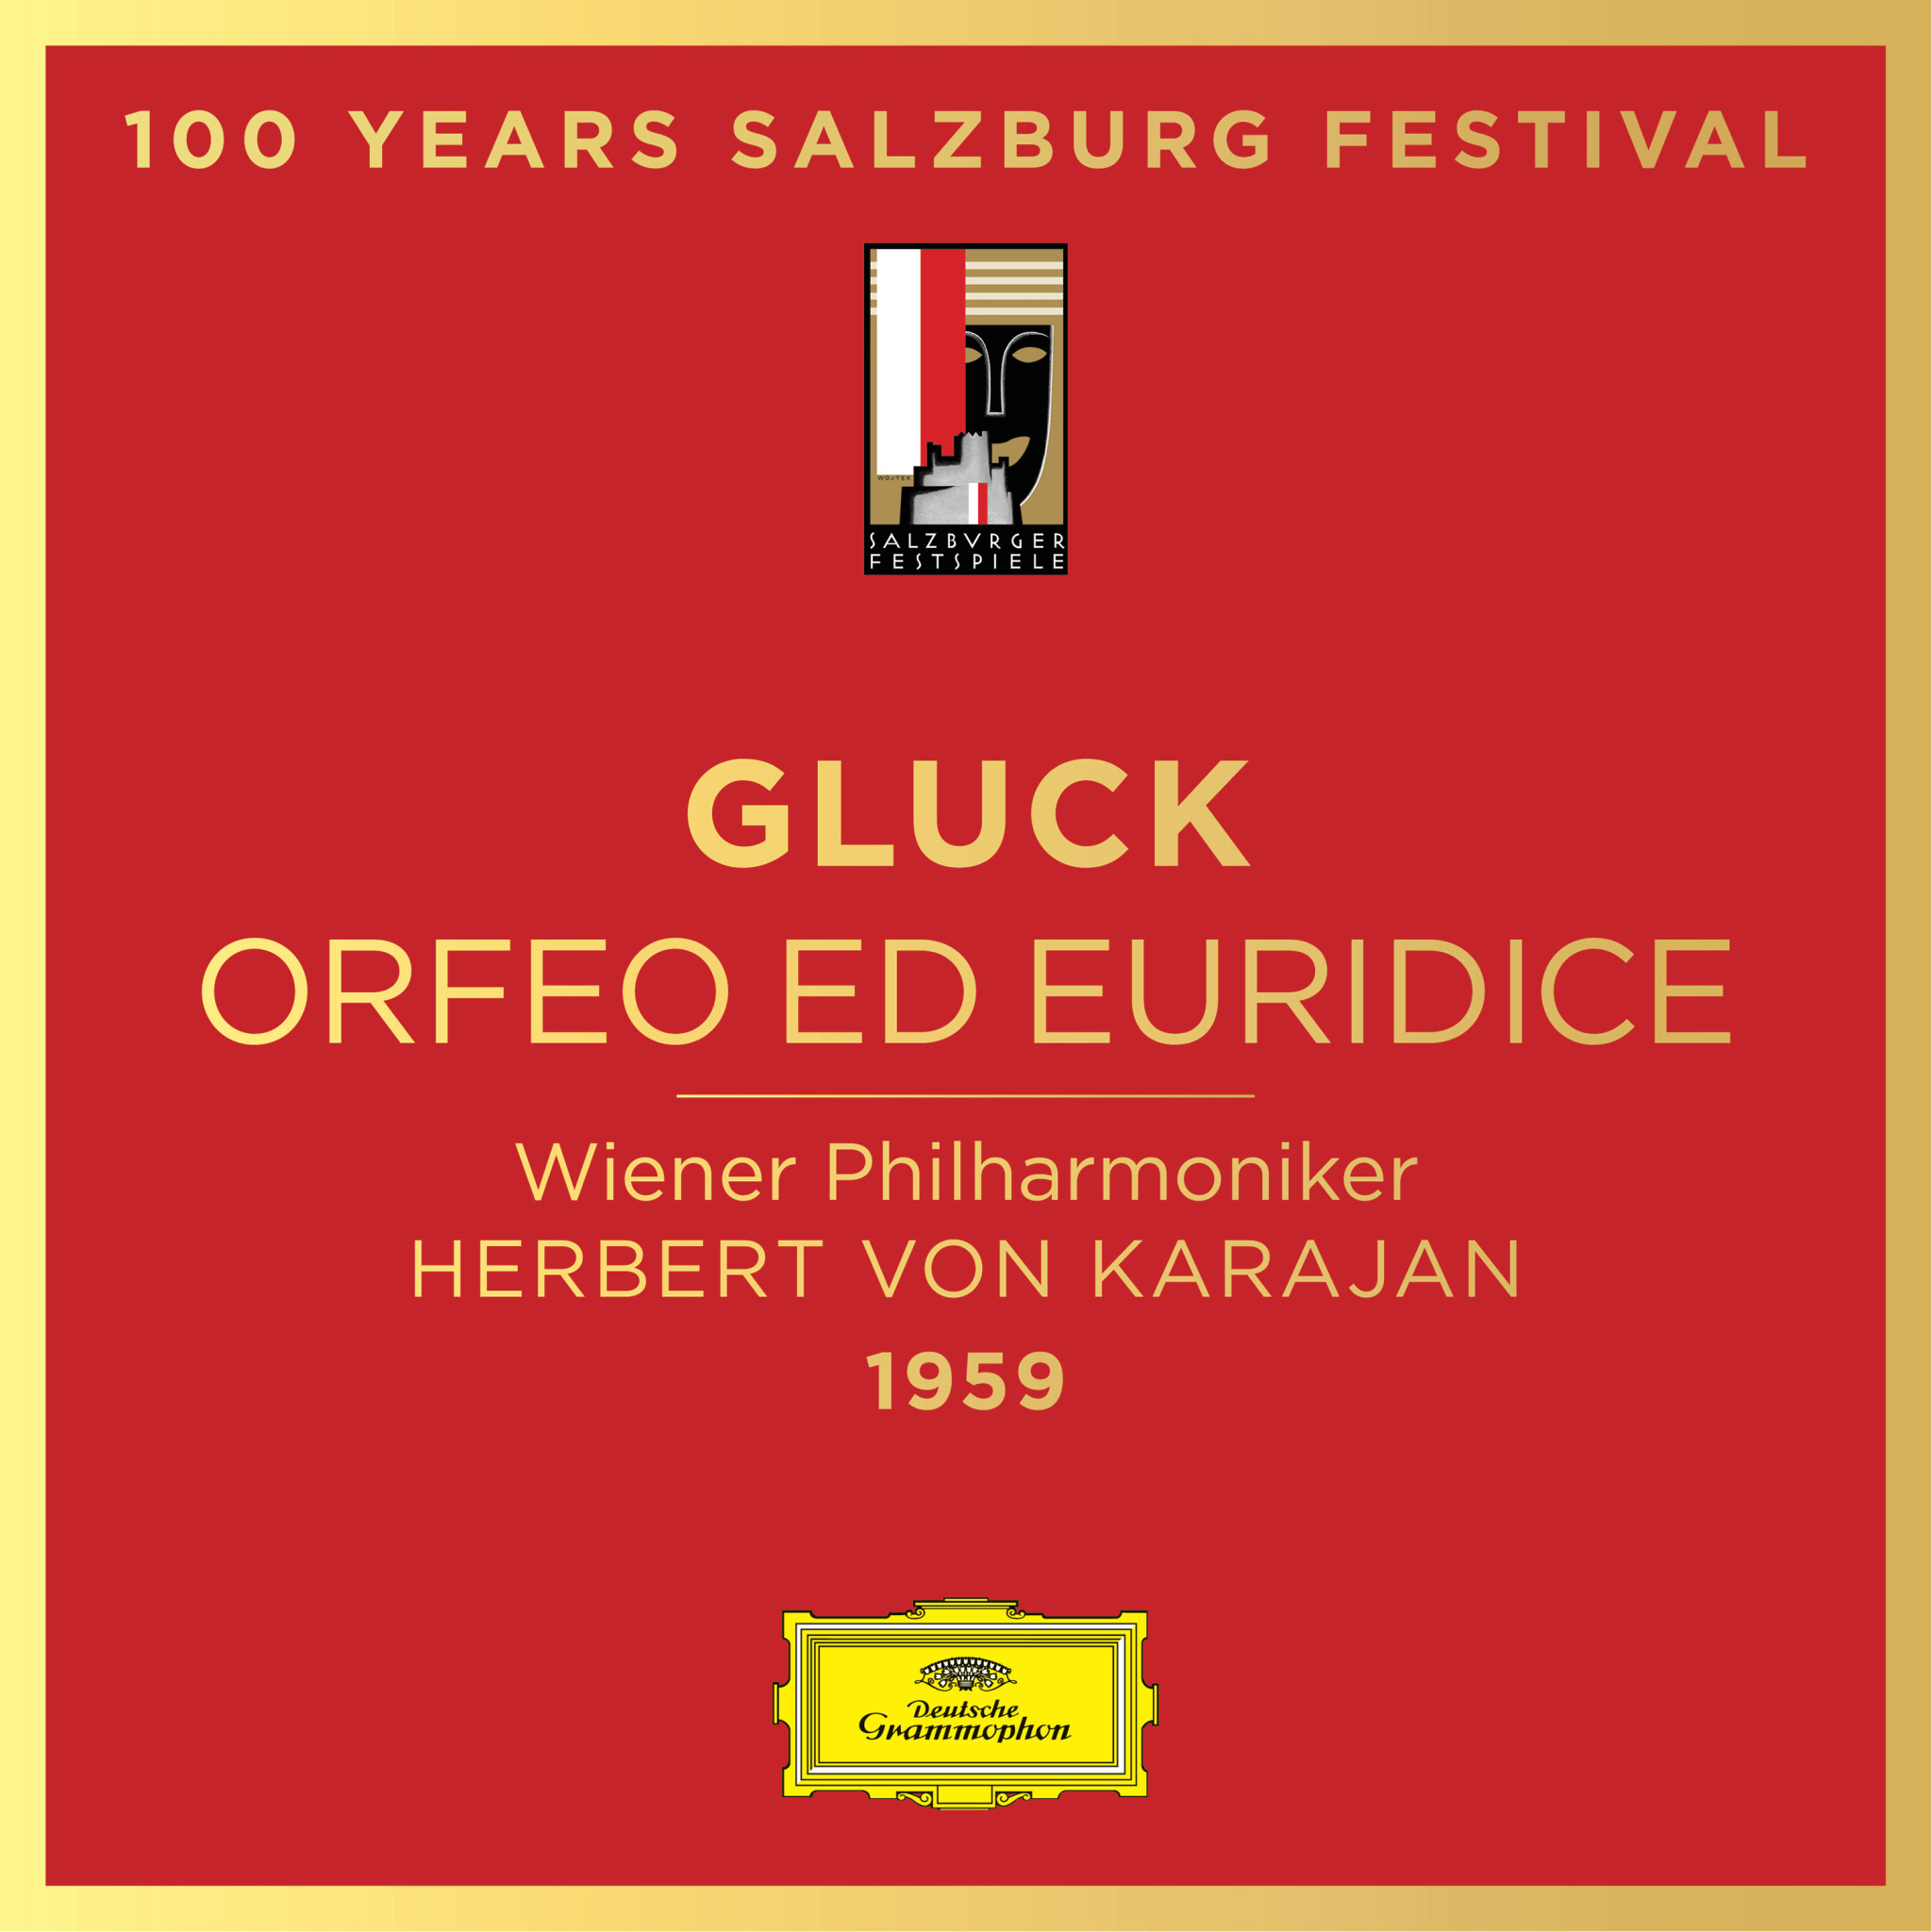 Gluck Orfeo Salzburg Festival Cover